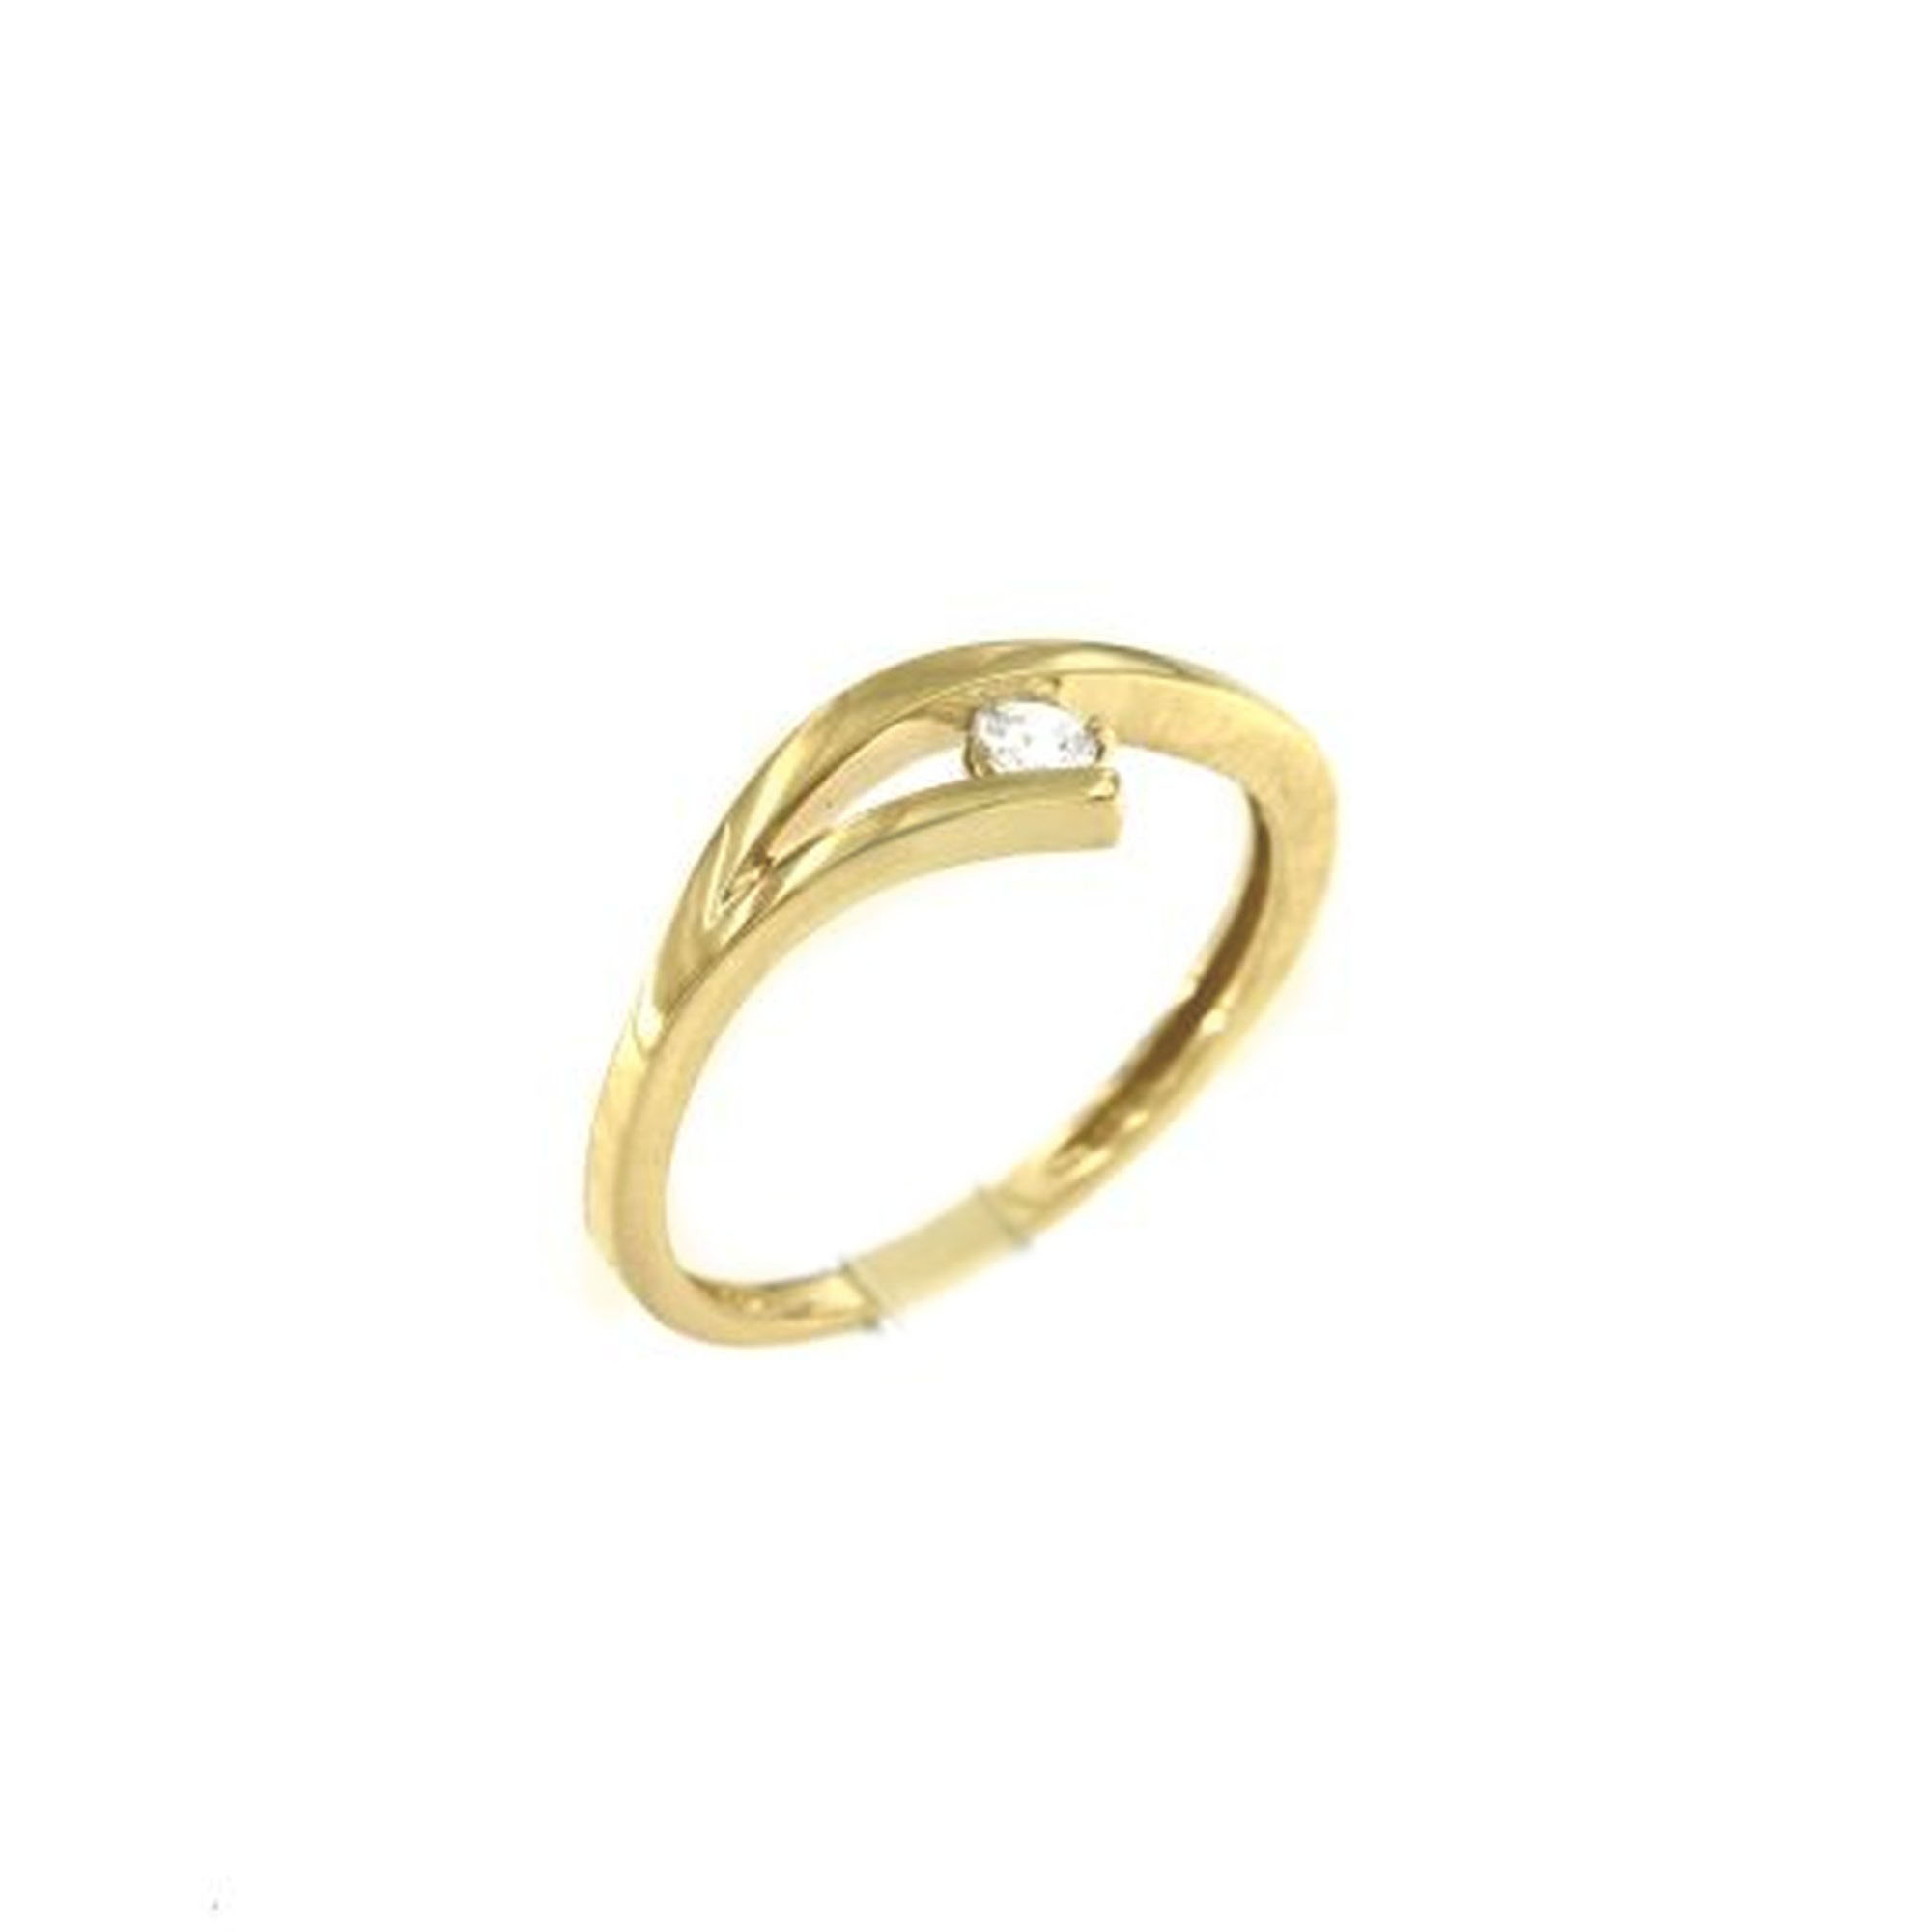 MOISS Moiss prsten ze žlutého zlata ANGELA RA000182 Velikost 50 mm RA000182 + doprava ZDARMA